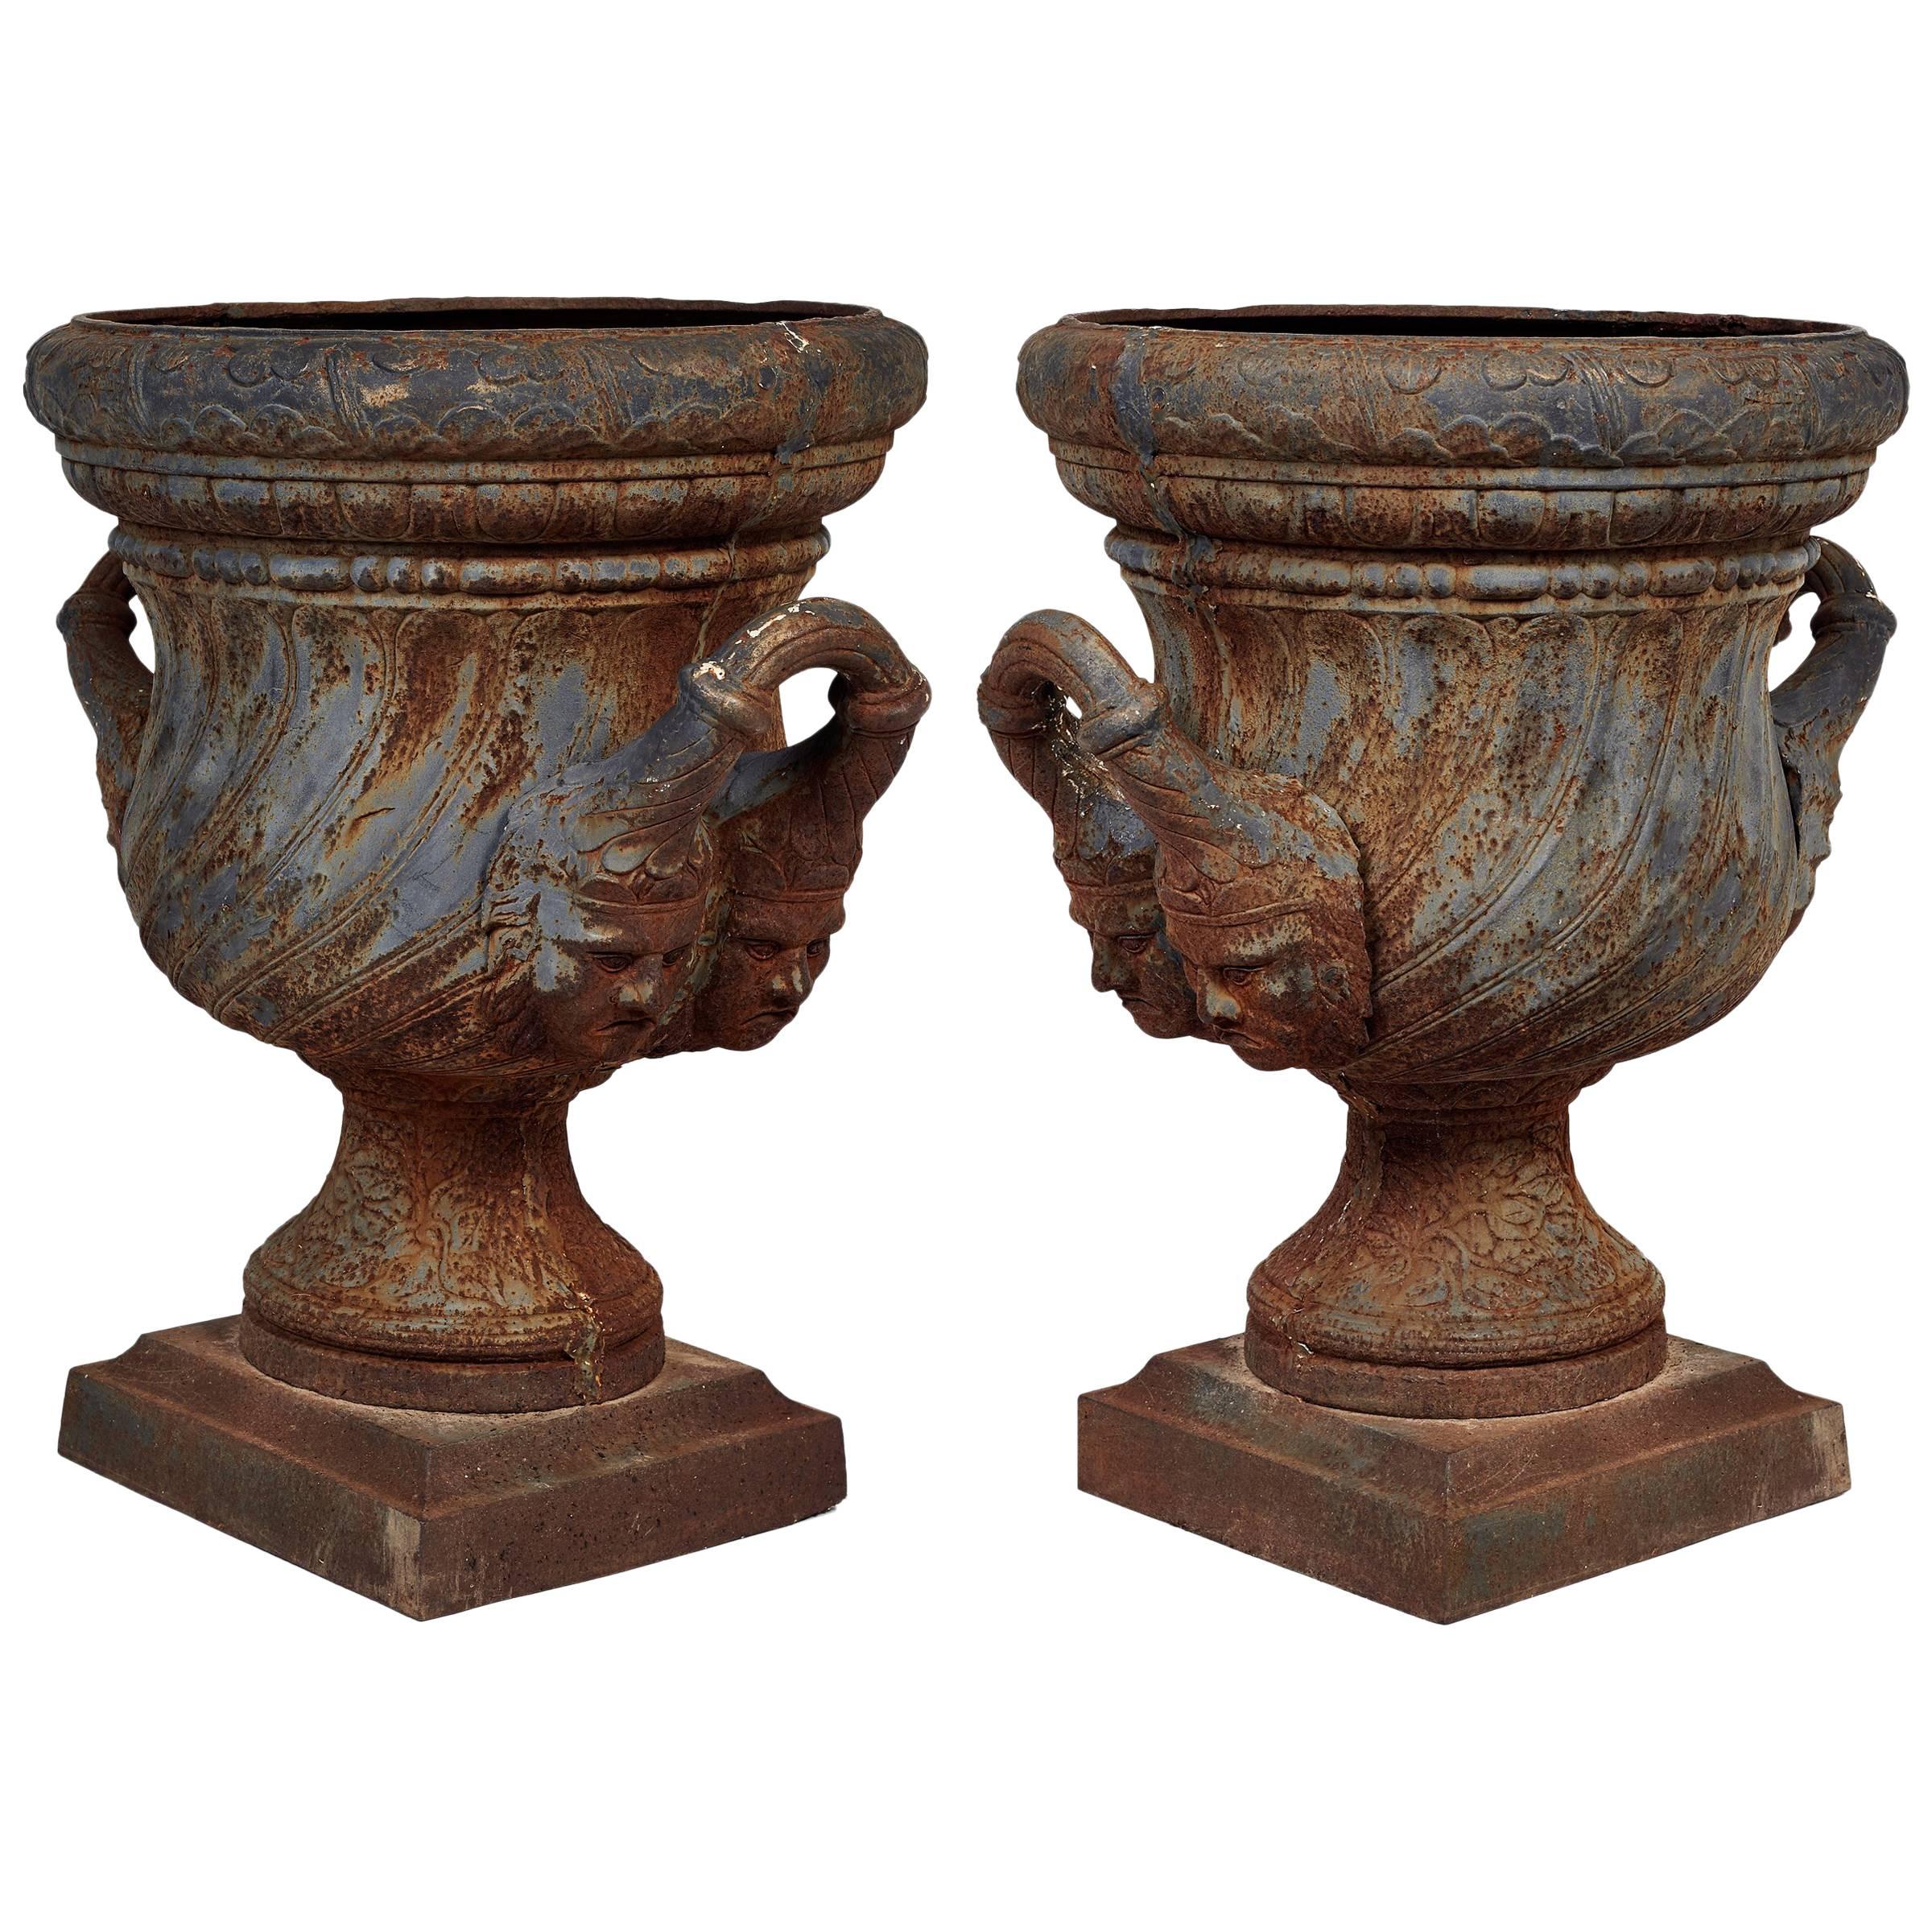 19th Century Pair of Iron Garden Urns